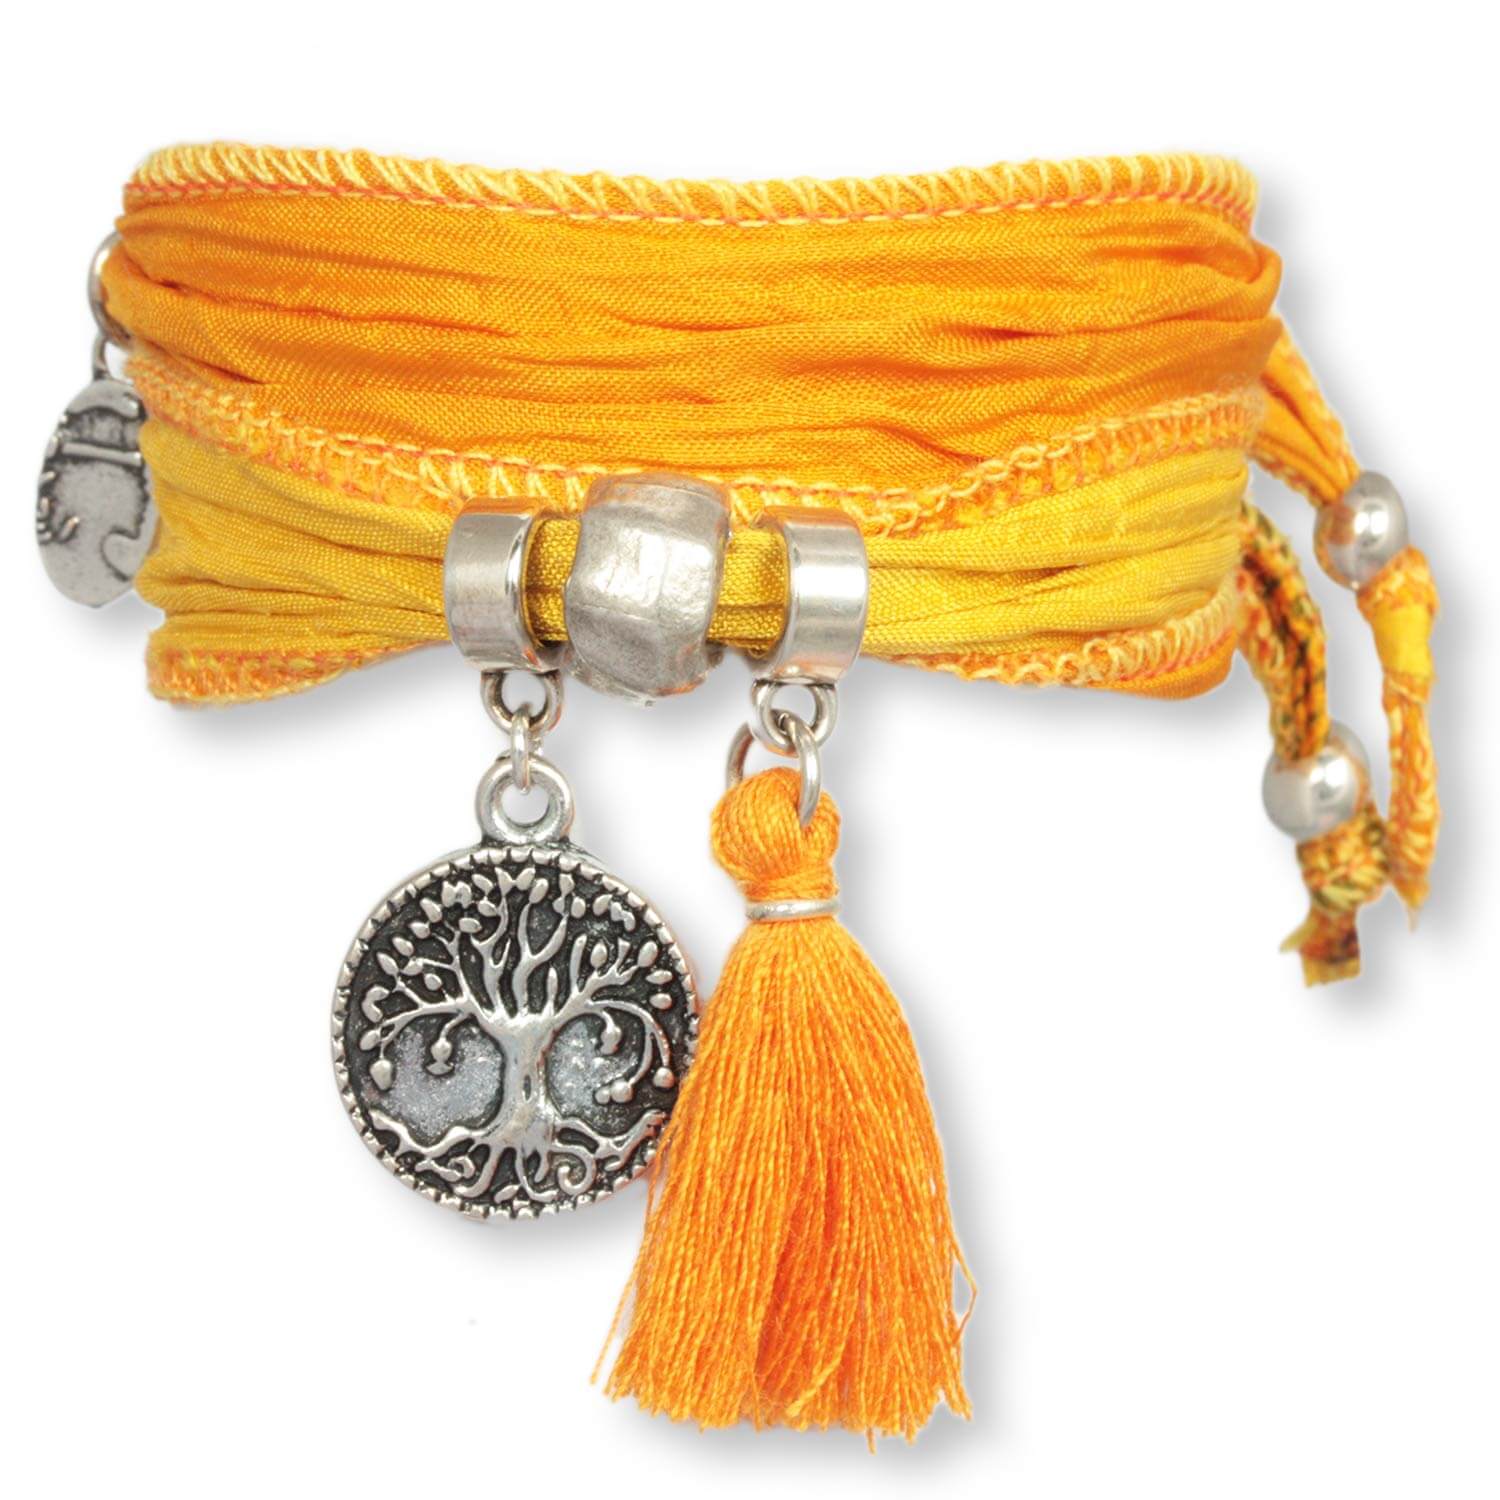 Sundown - Tree of Life Armband aus indischen Saris